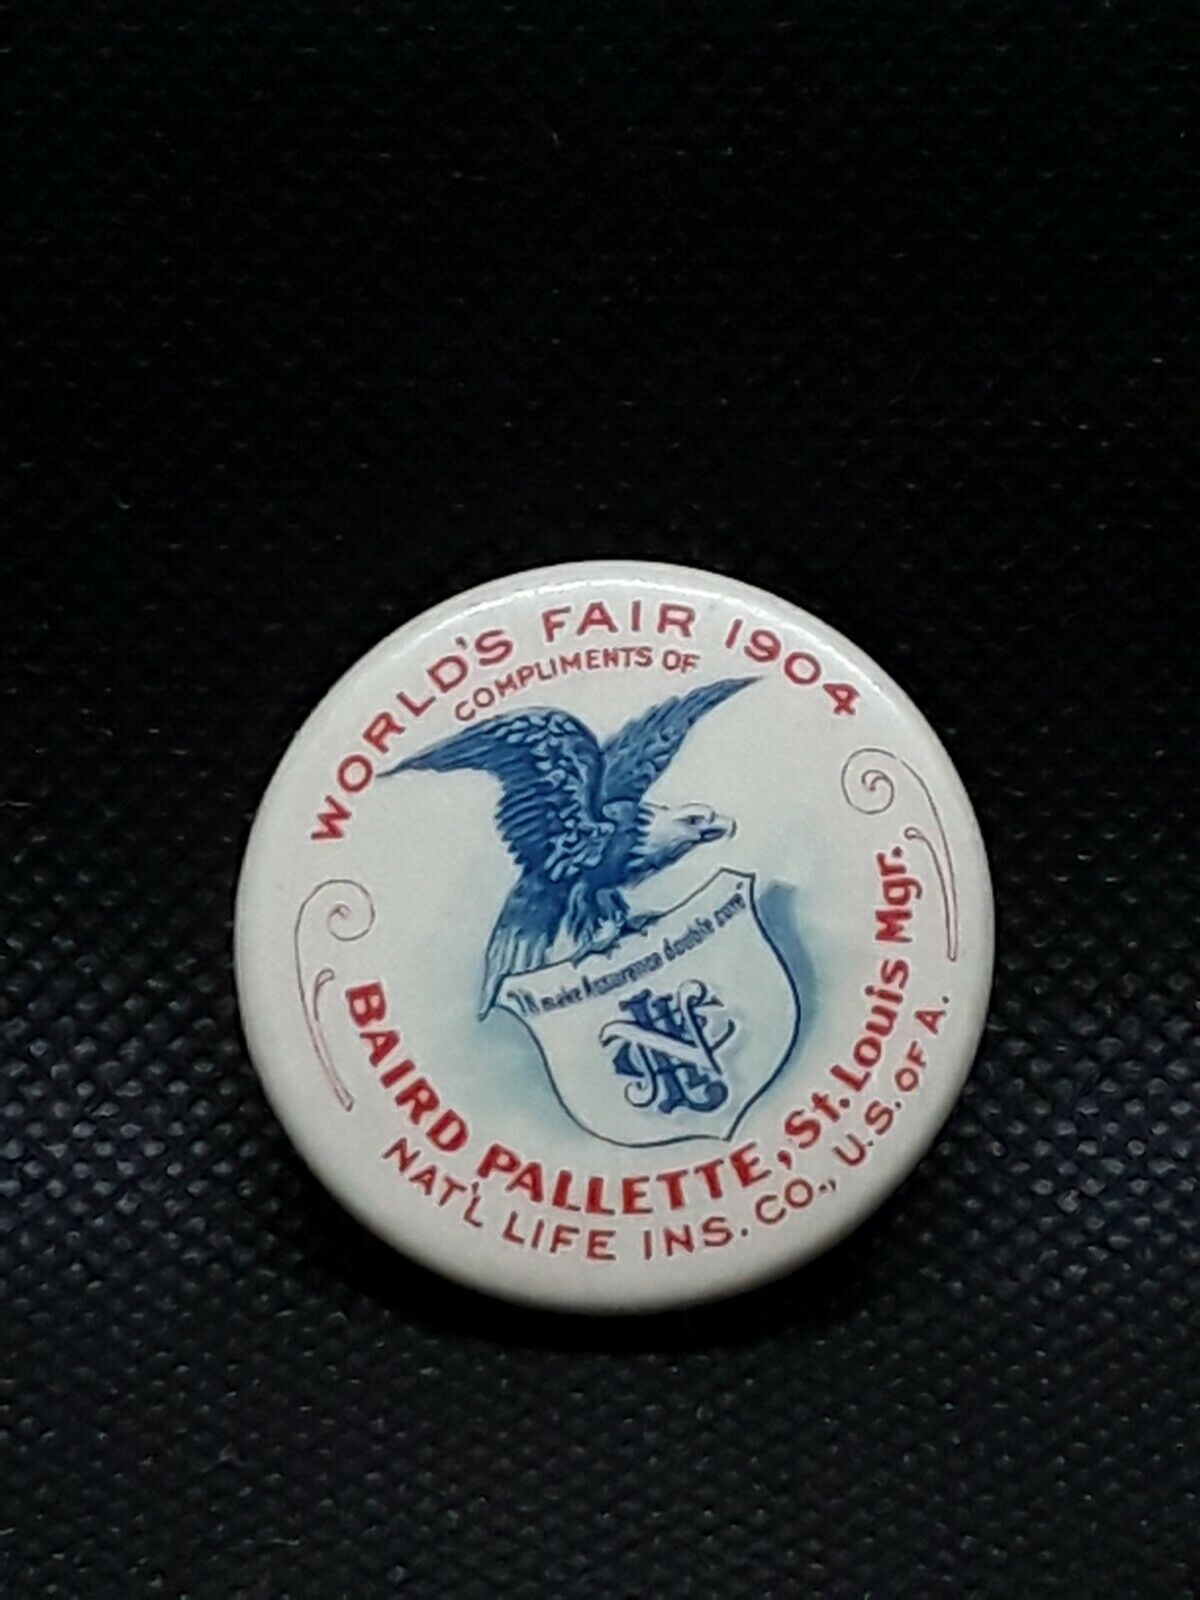 World's Fair 1904 (nat'l Life Ins. Co. U.s.a. - Comp. Of Baird Pallette) Pinback